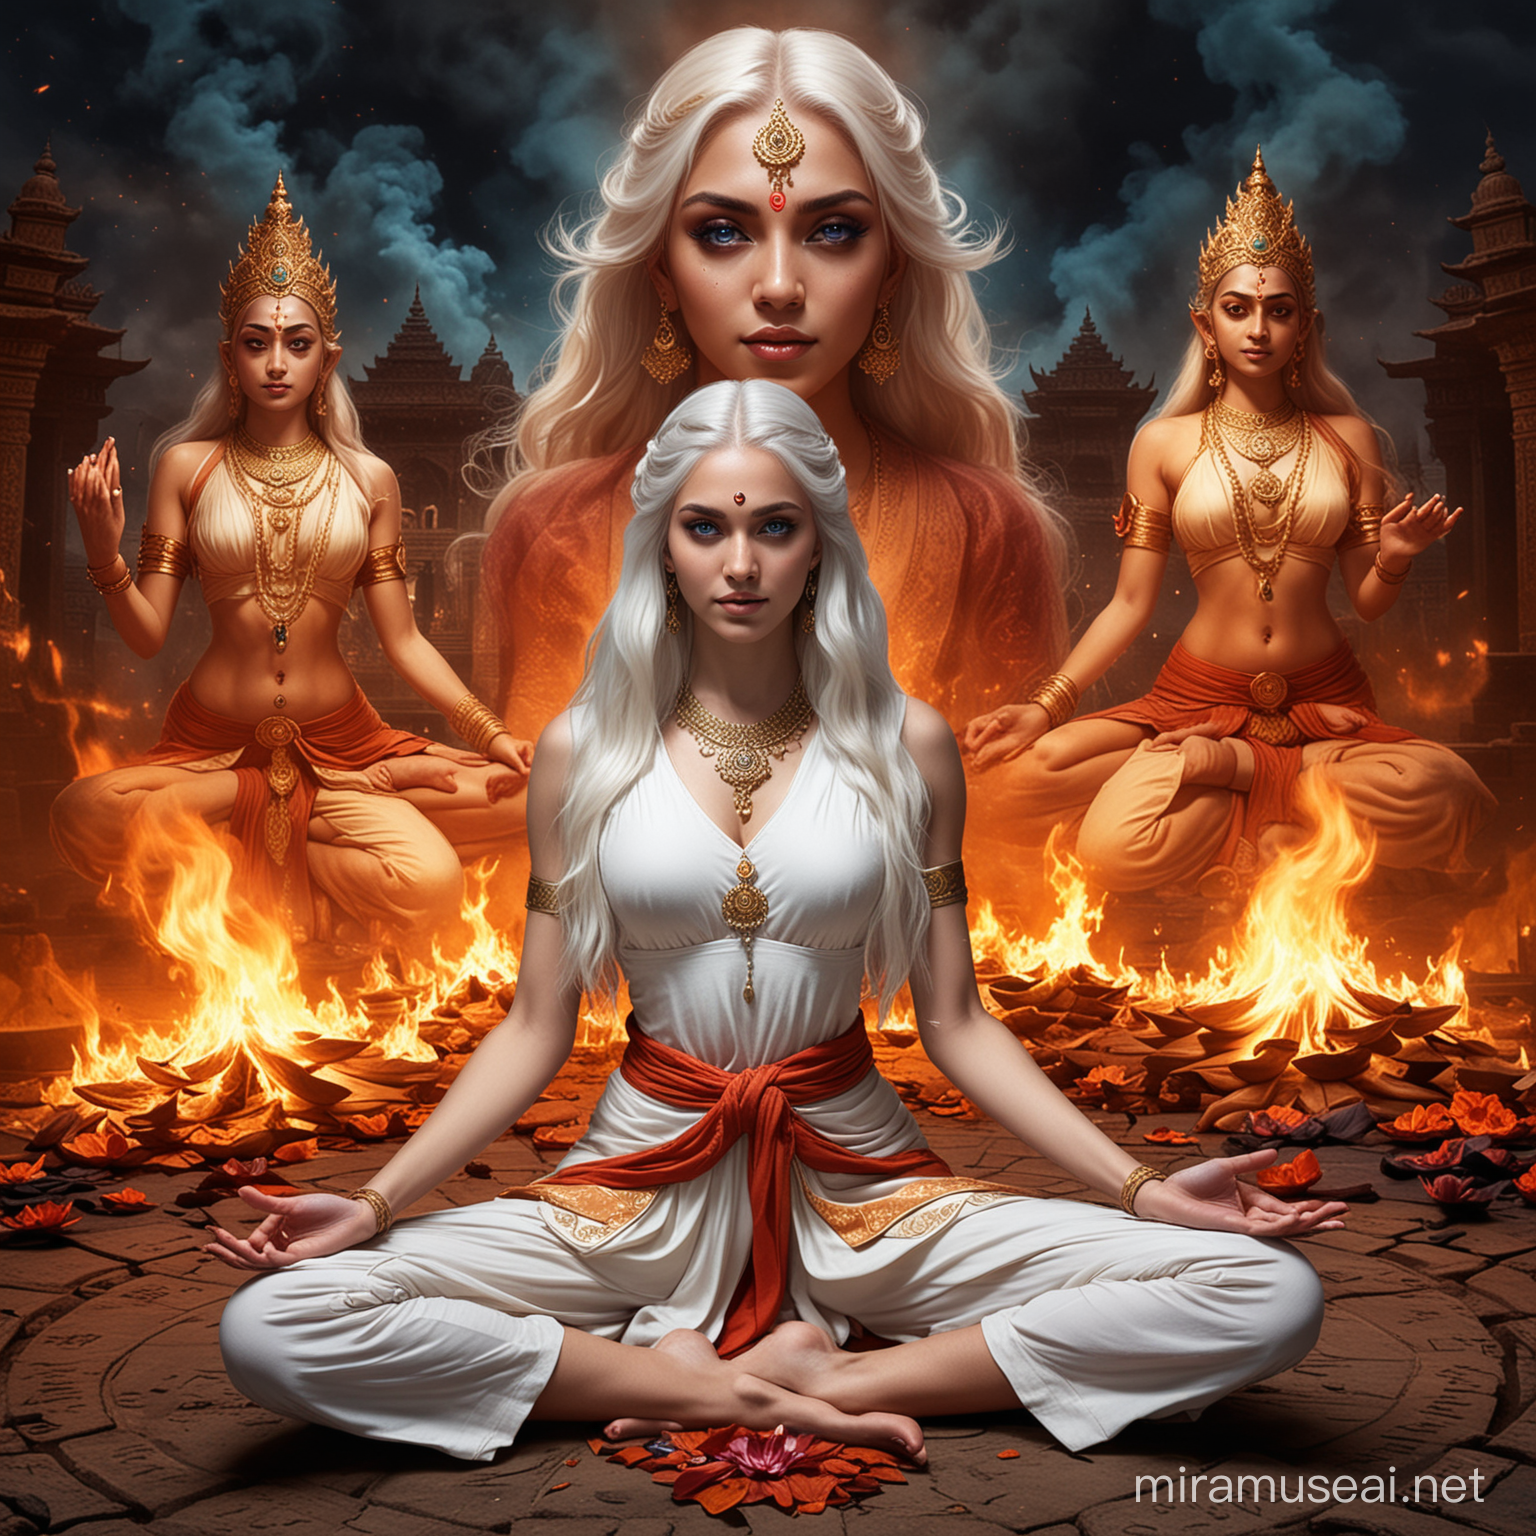 Mystical Hindu Empress in Lotus Position Amidst Fiery Demonic Goddesses